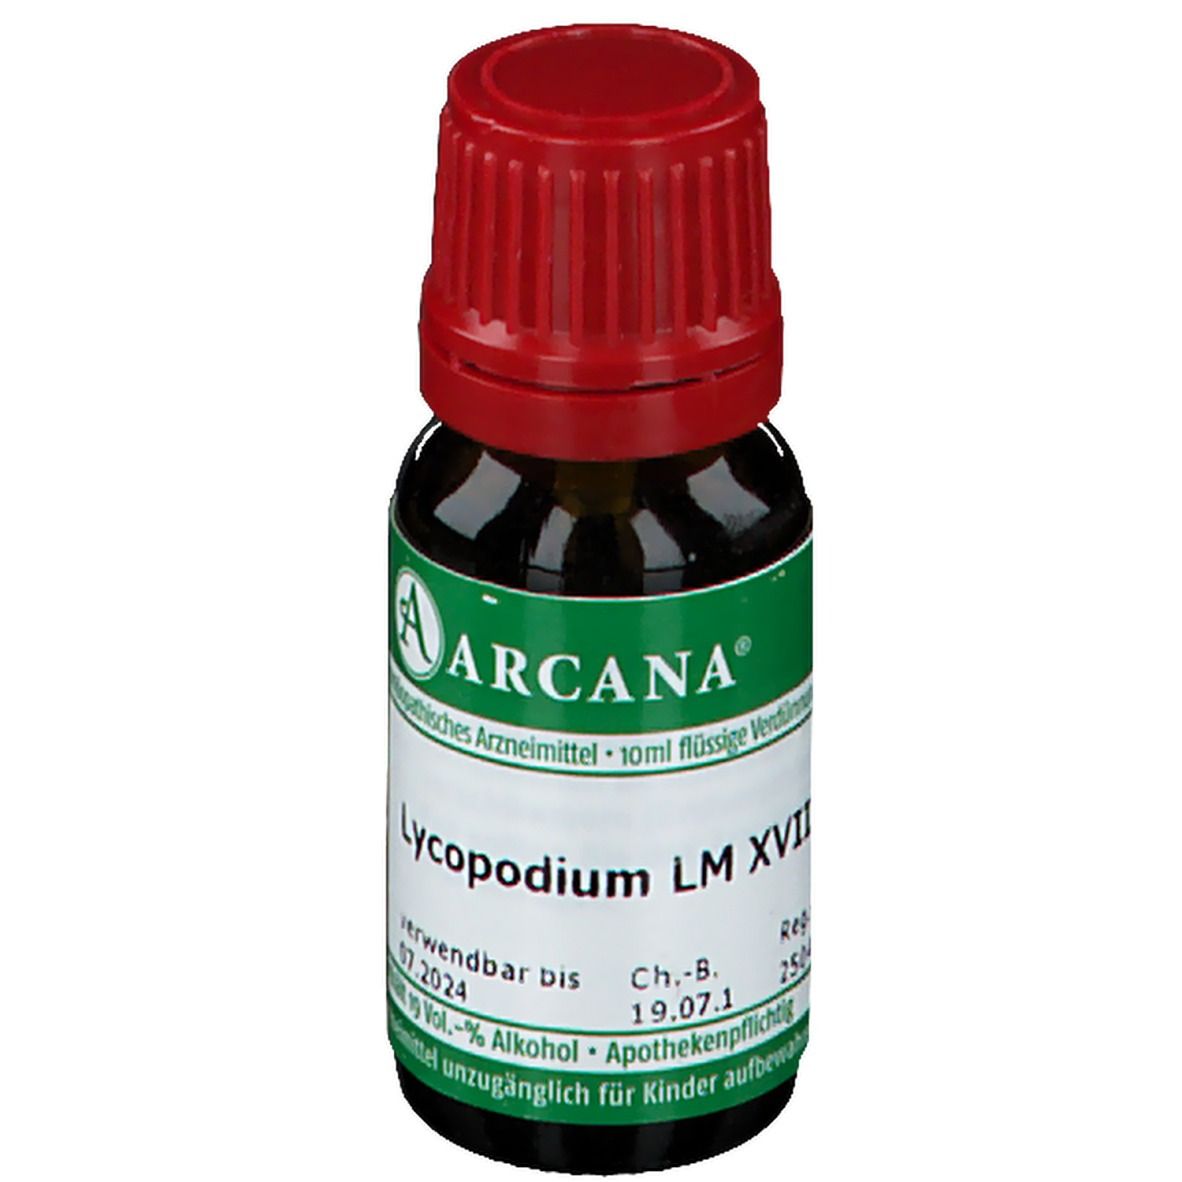 ARCANA® Lycopodium LM XVIII